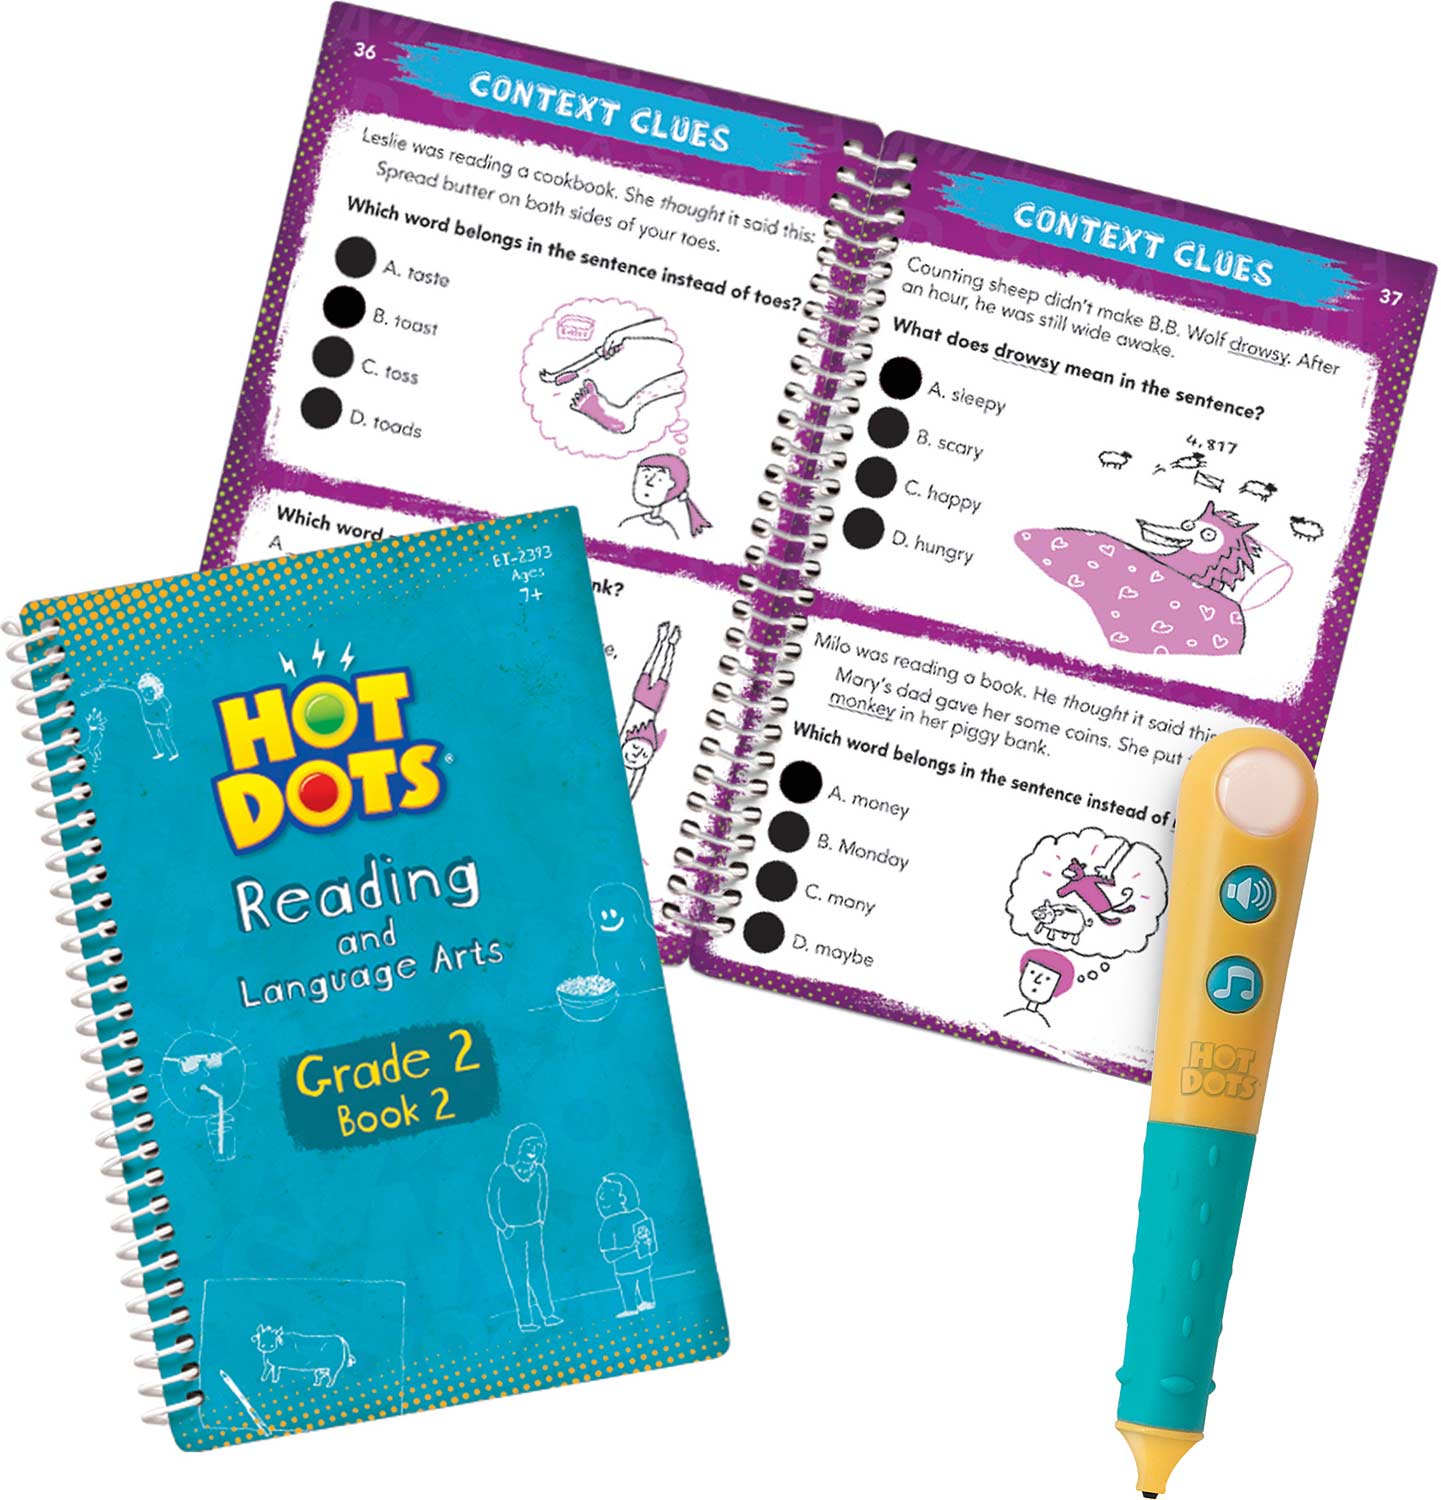 Hot Dots Jr. Let's Master Grade 2 Reading Set with Hot Dots Pen - Toyrifix